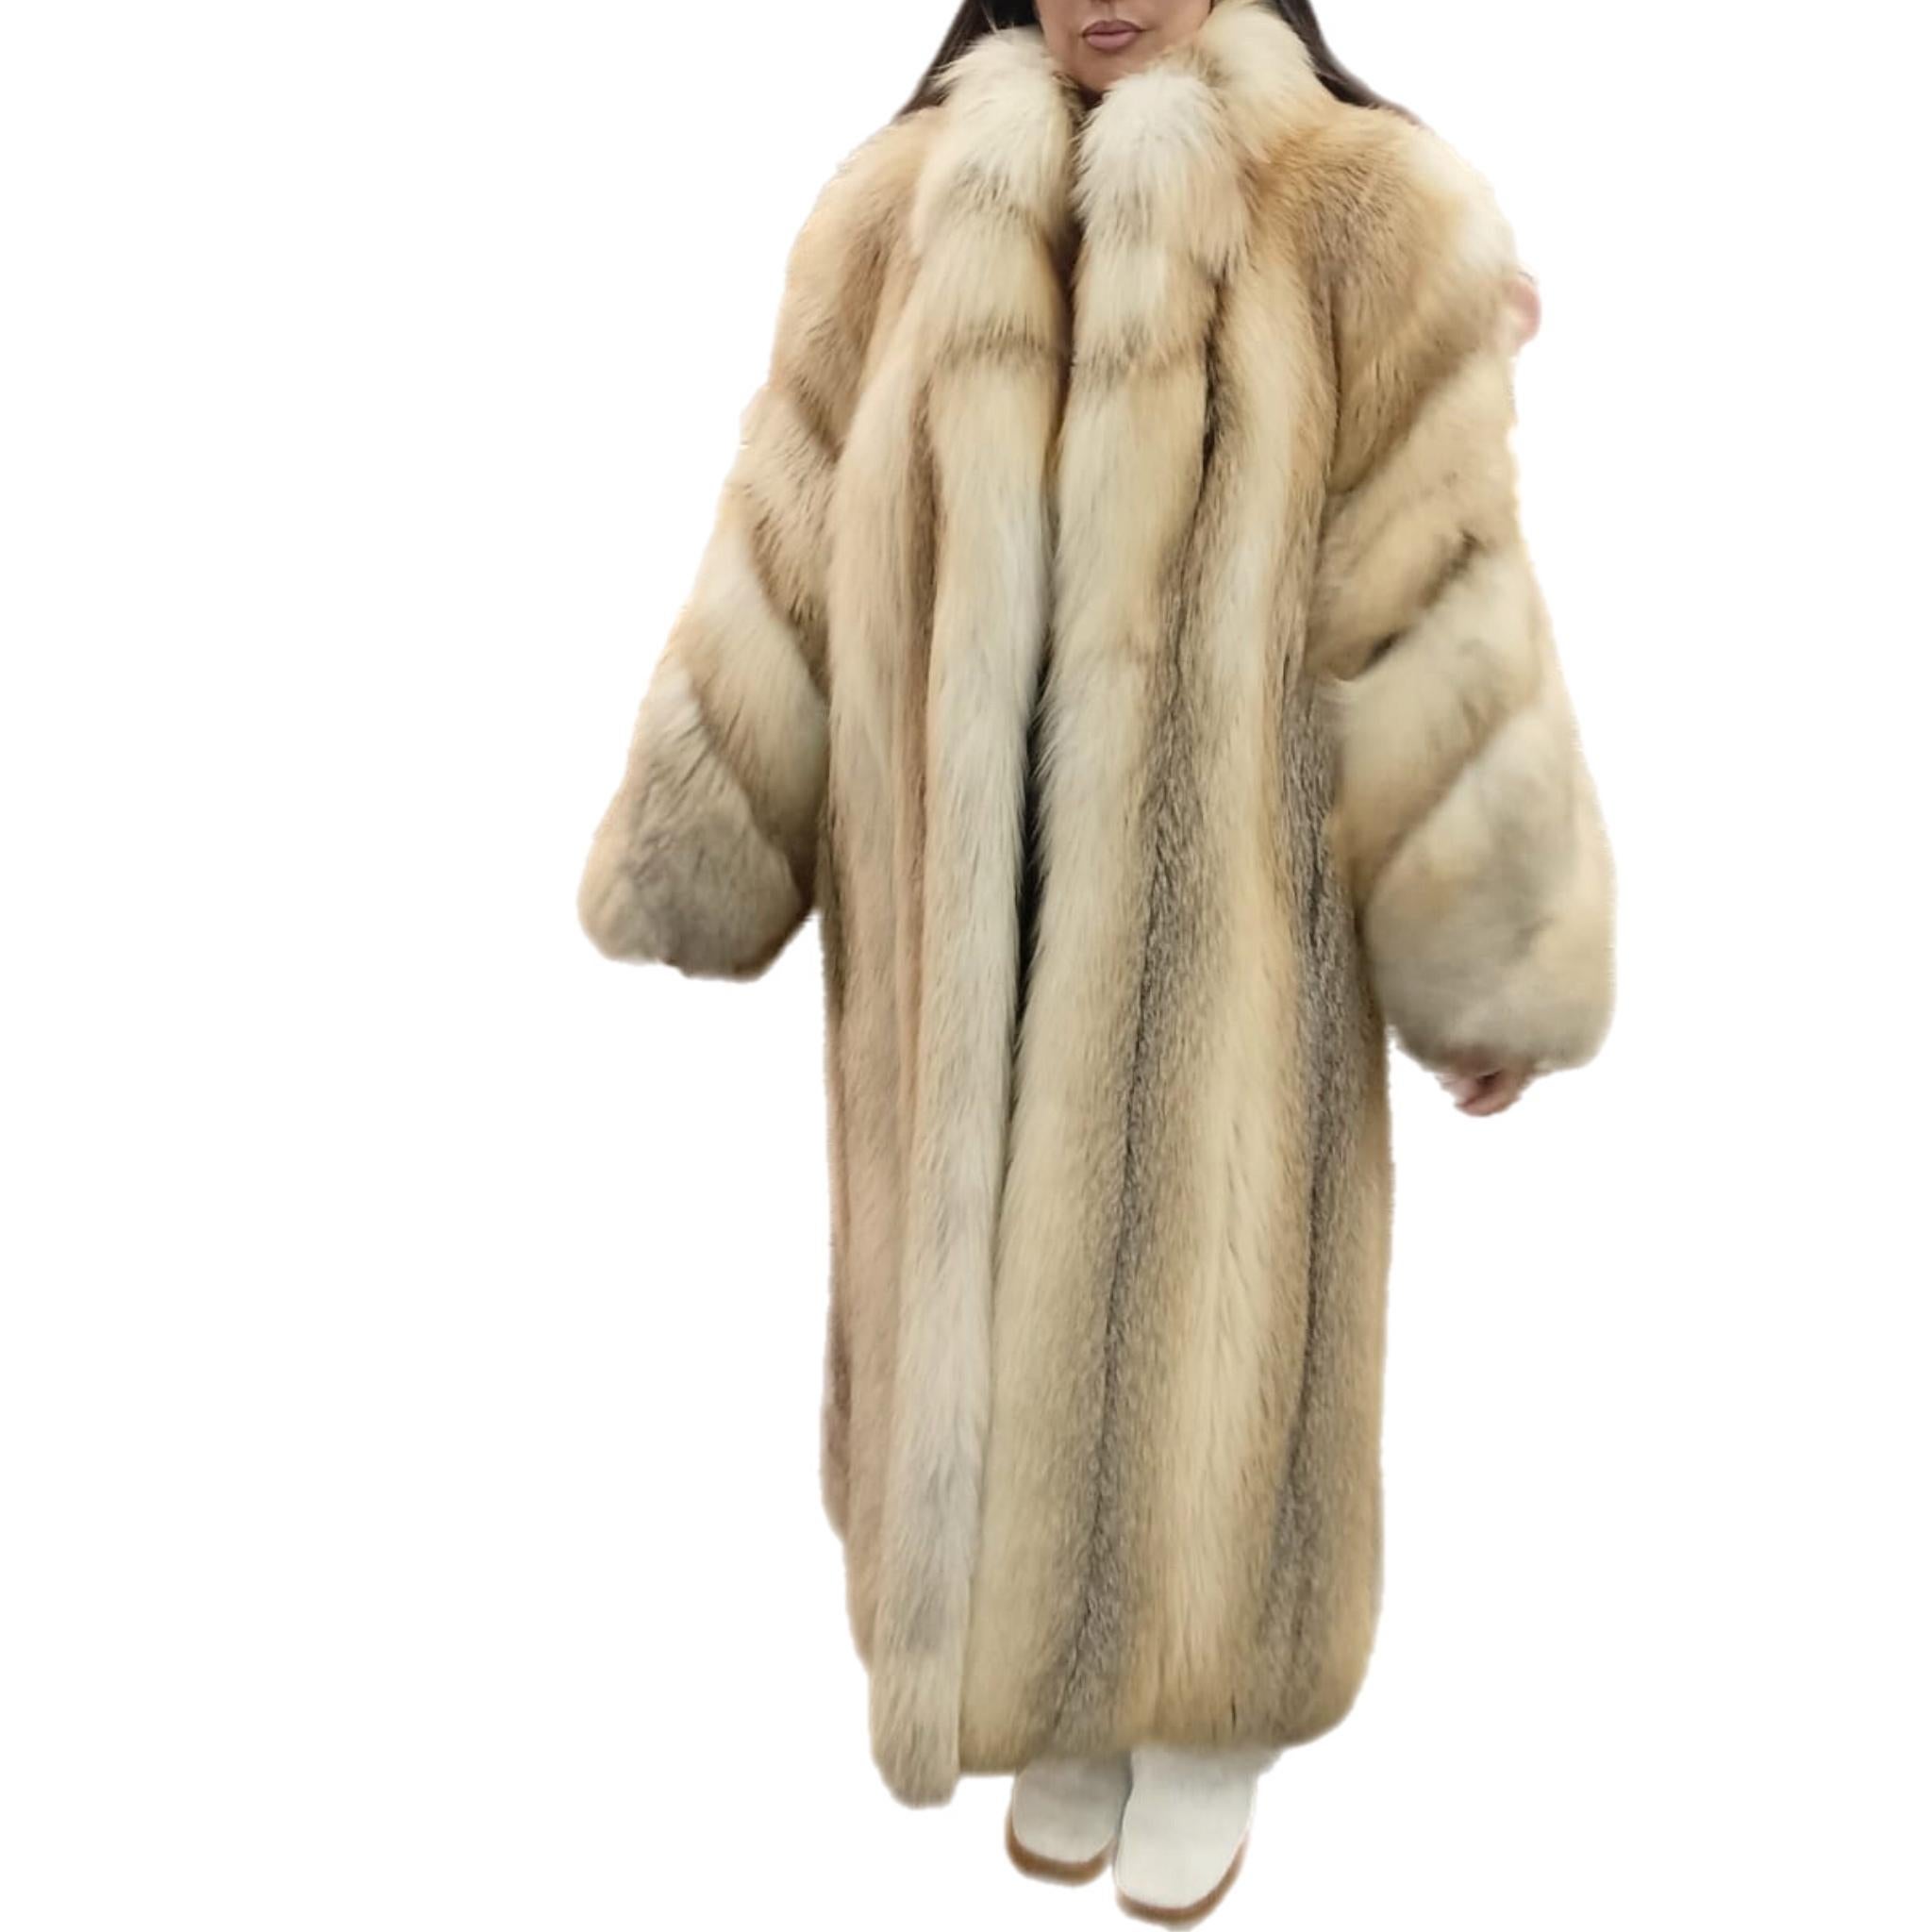 Manteau léger saga Island en fourrure de renard, neuf, taille 12 L en vente 2